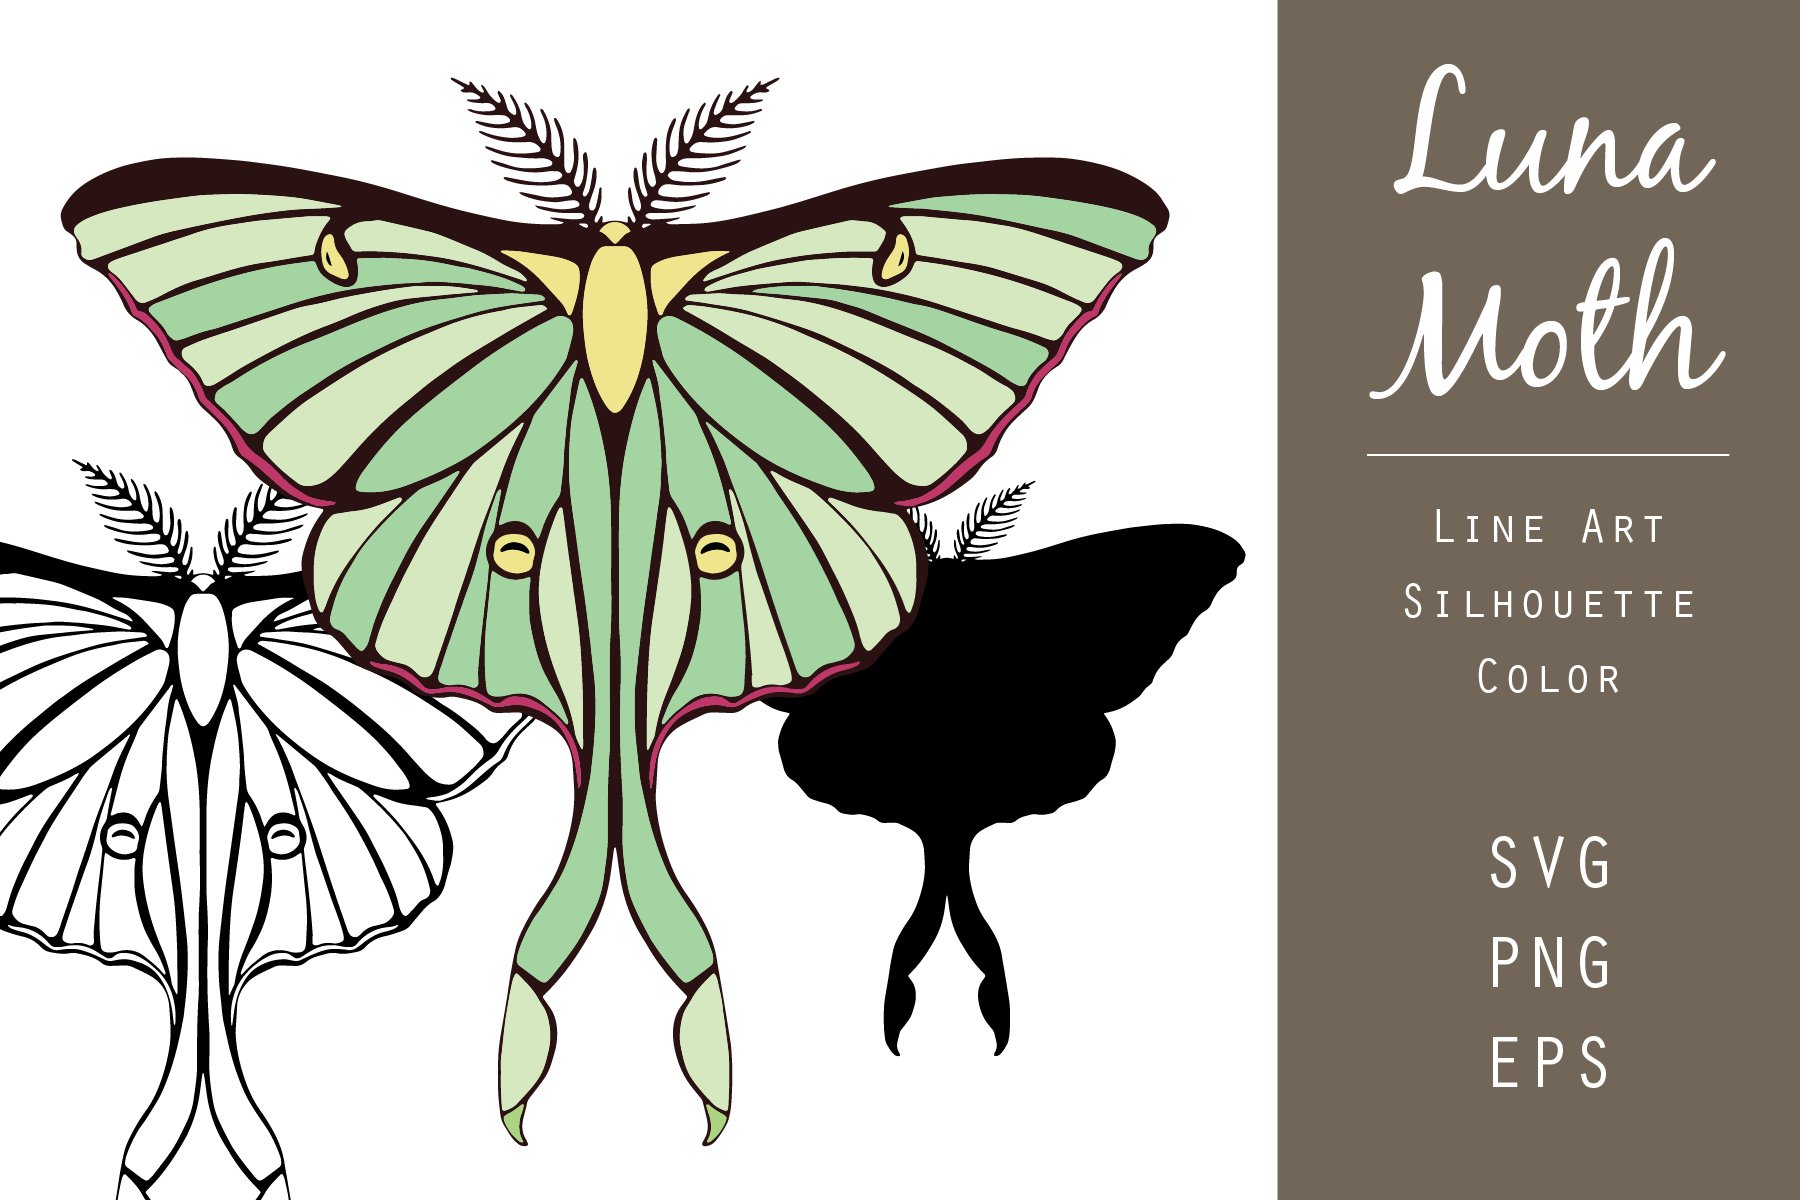 Luna Moth Vector Graphic Set cover image.